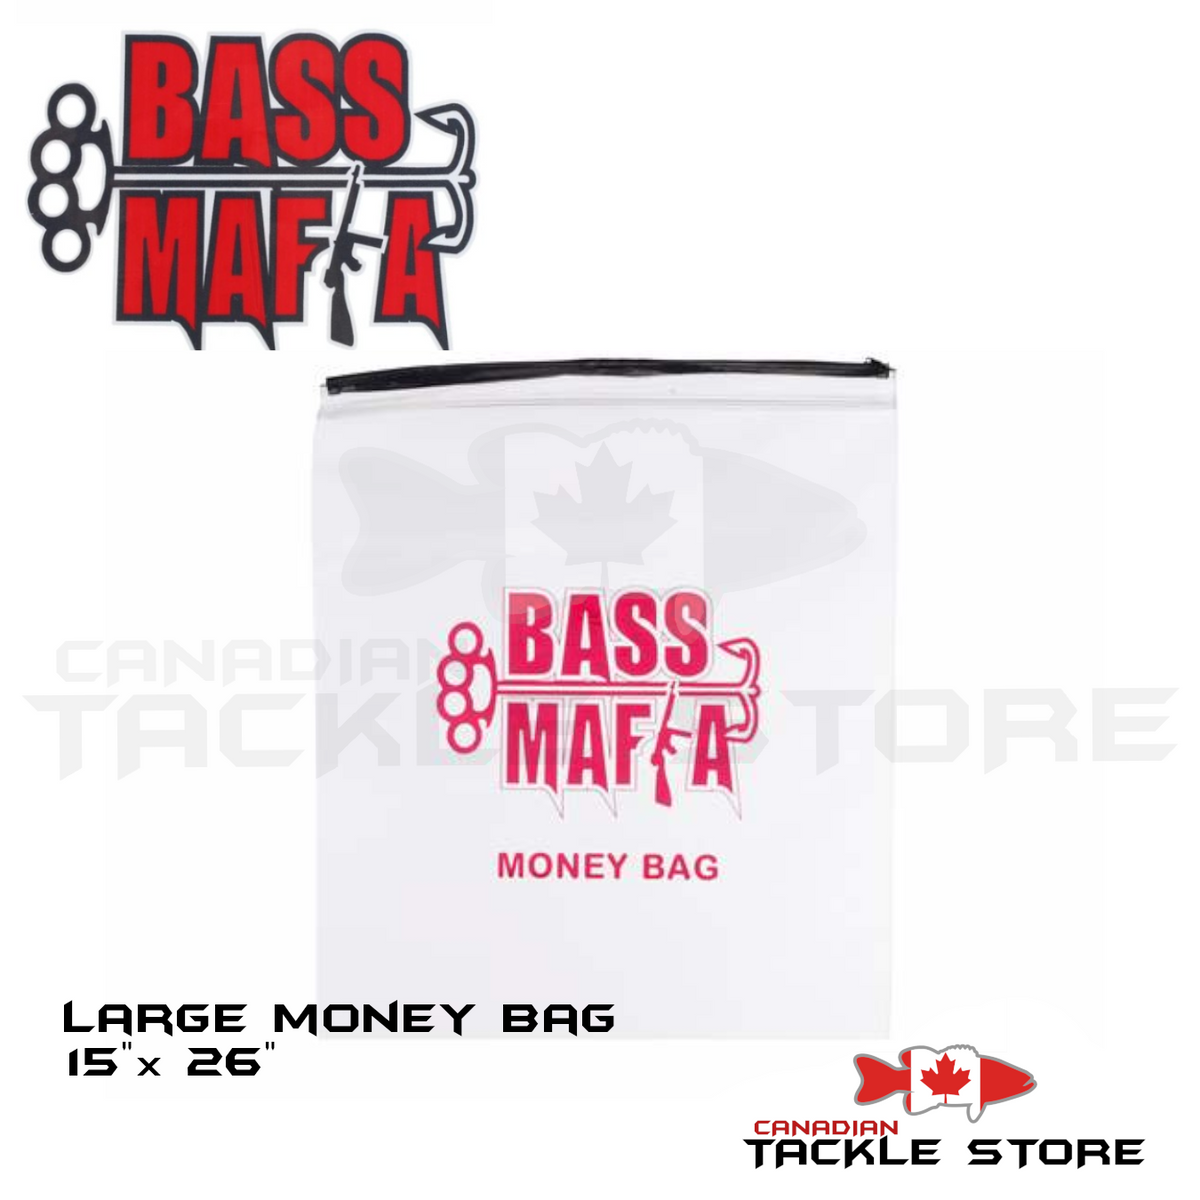 3 bass mafia mallard money tackle storage bags boating fishing heavy duty  13x16